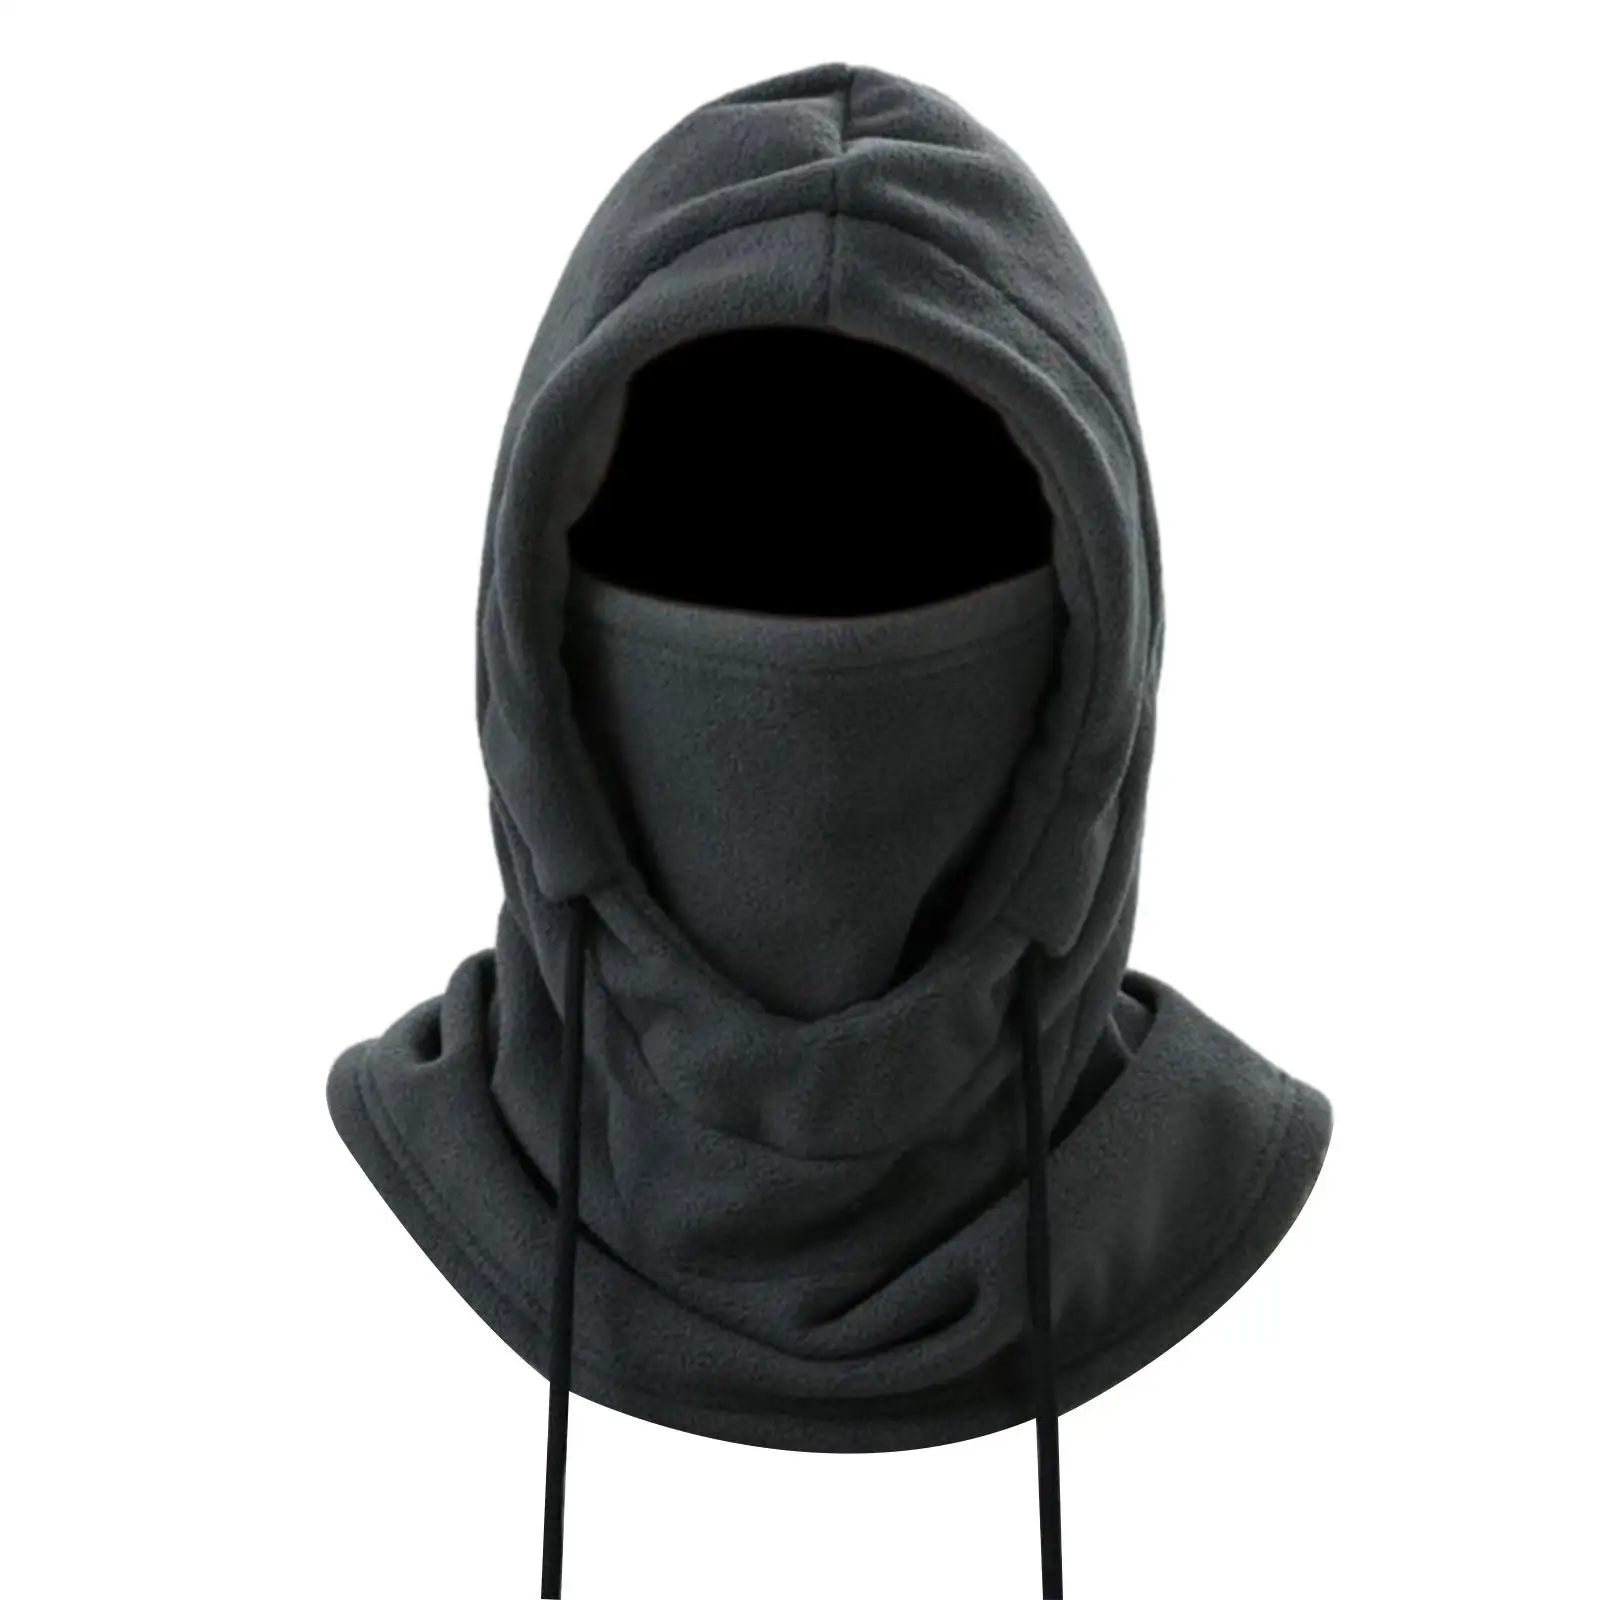 Face Mask Balaclava Hooded Neck Warmer Soft Thermal Winter Hat Balaclava Ski Mask for Snow Climbing Ski Outdoor Sports